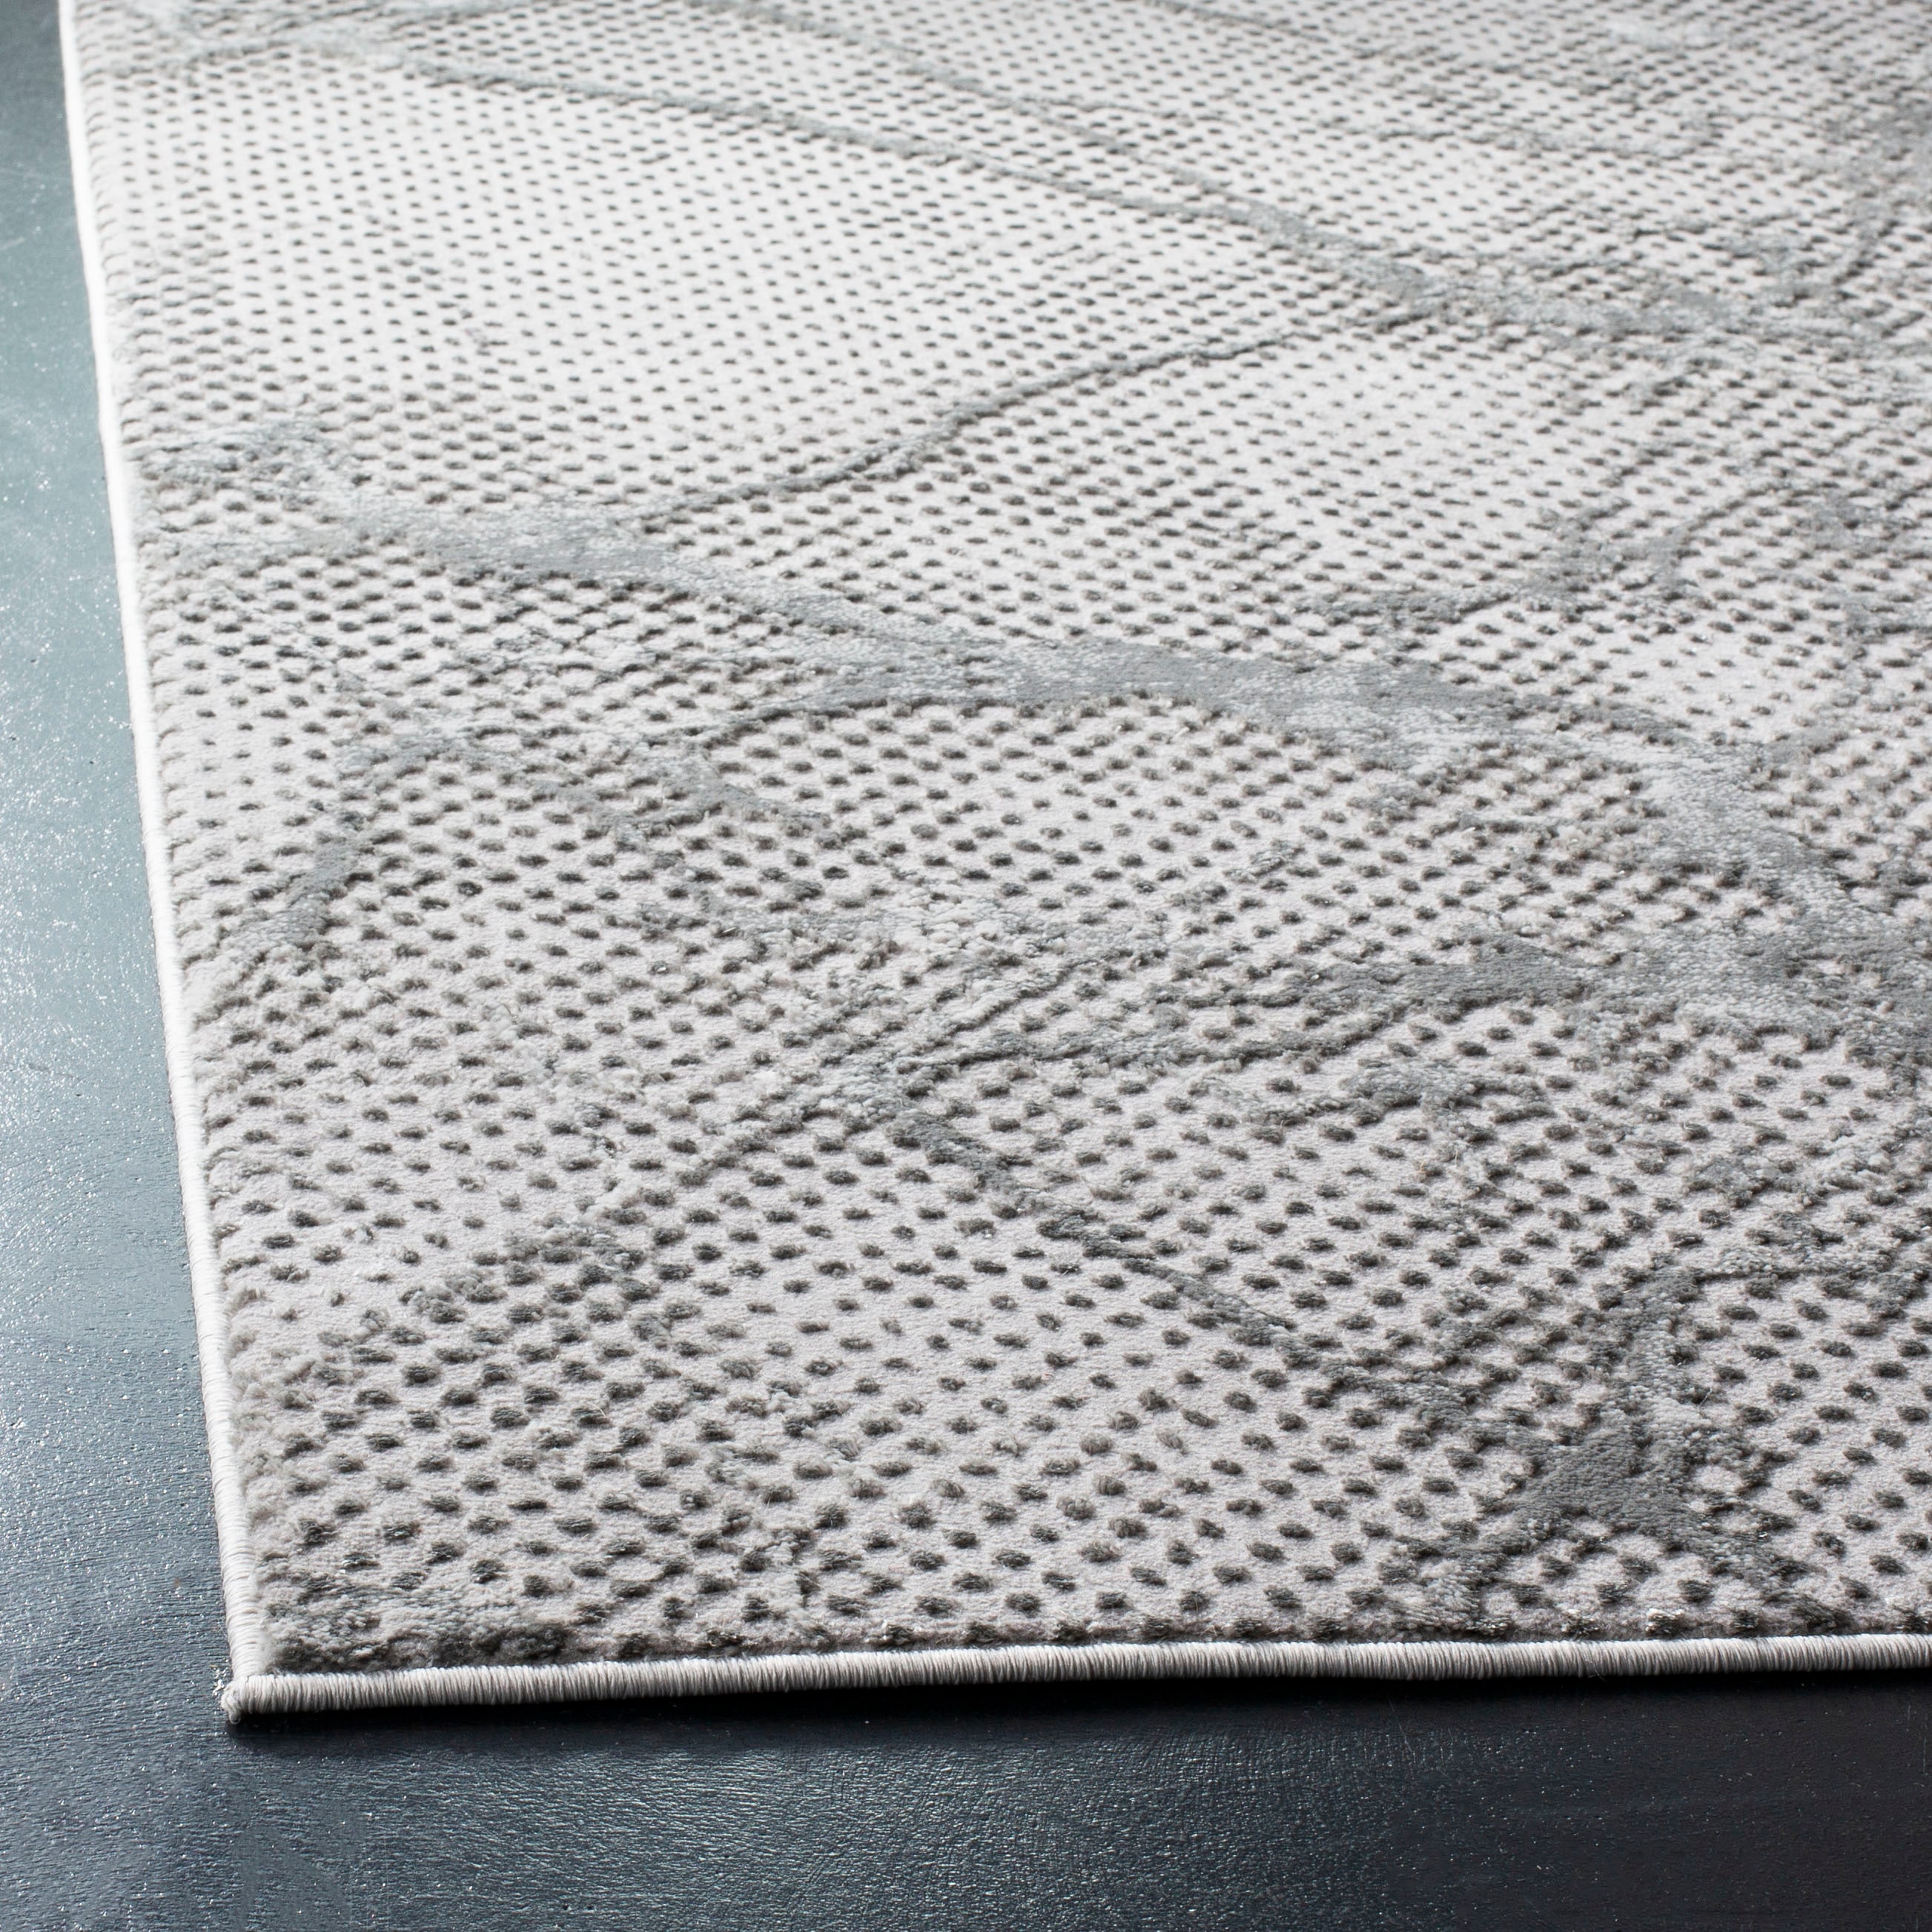 Safavieh Lurex Lupp 8 x 10 Black/Gray Indoor Abstract Industrial